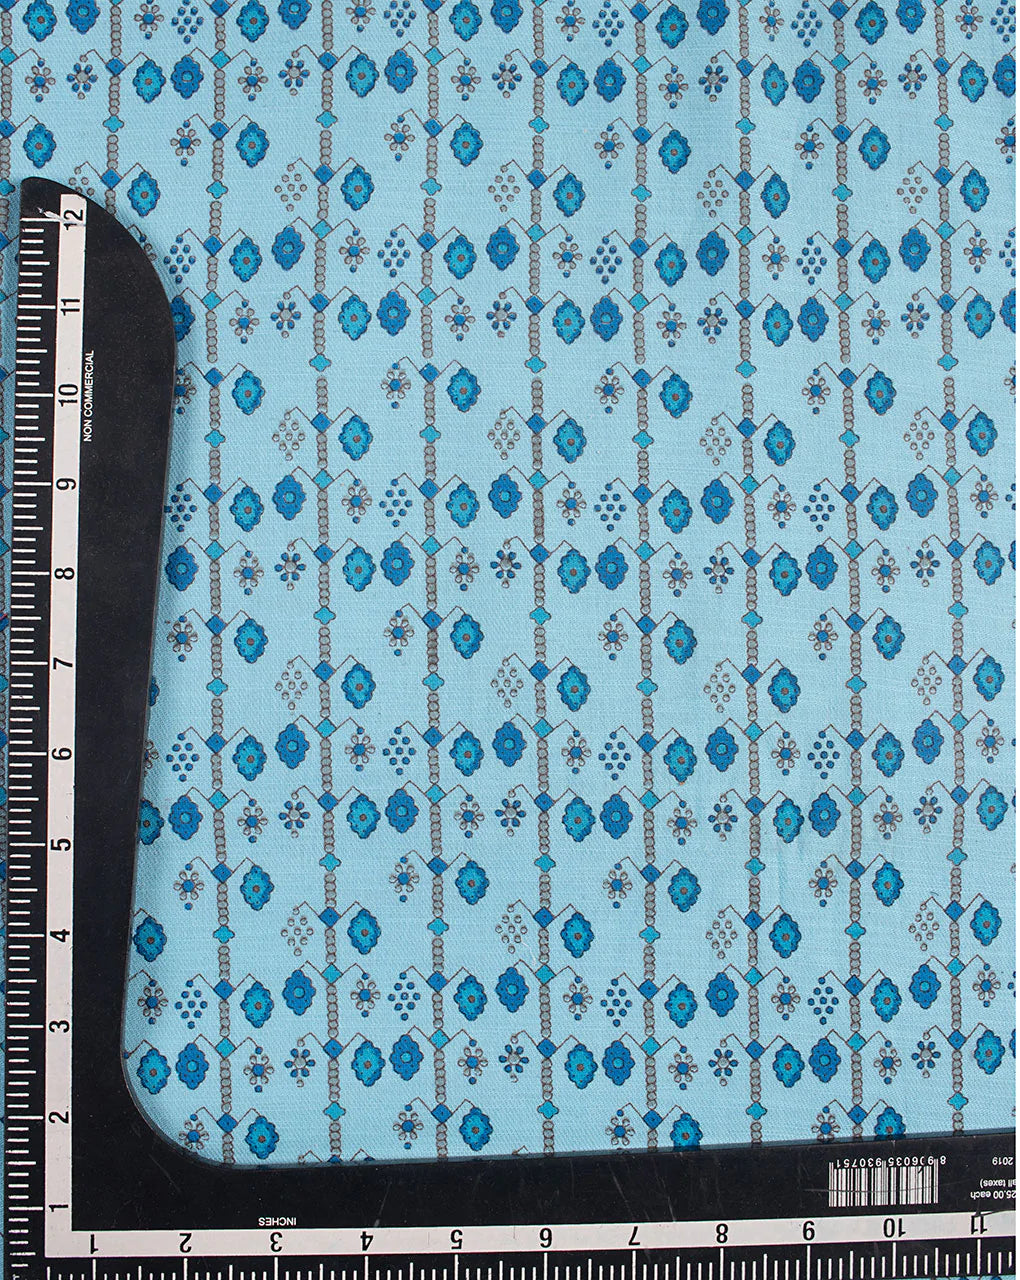 Screen Print Loom Textured Cotton Fabric - Fabriclore.com